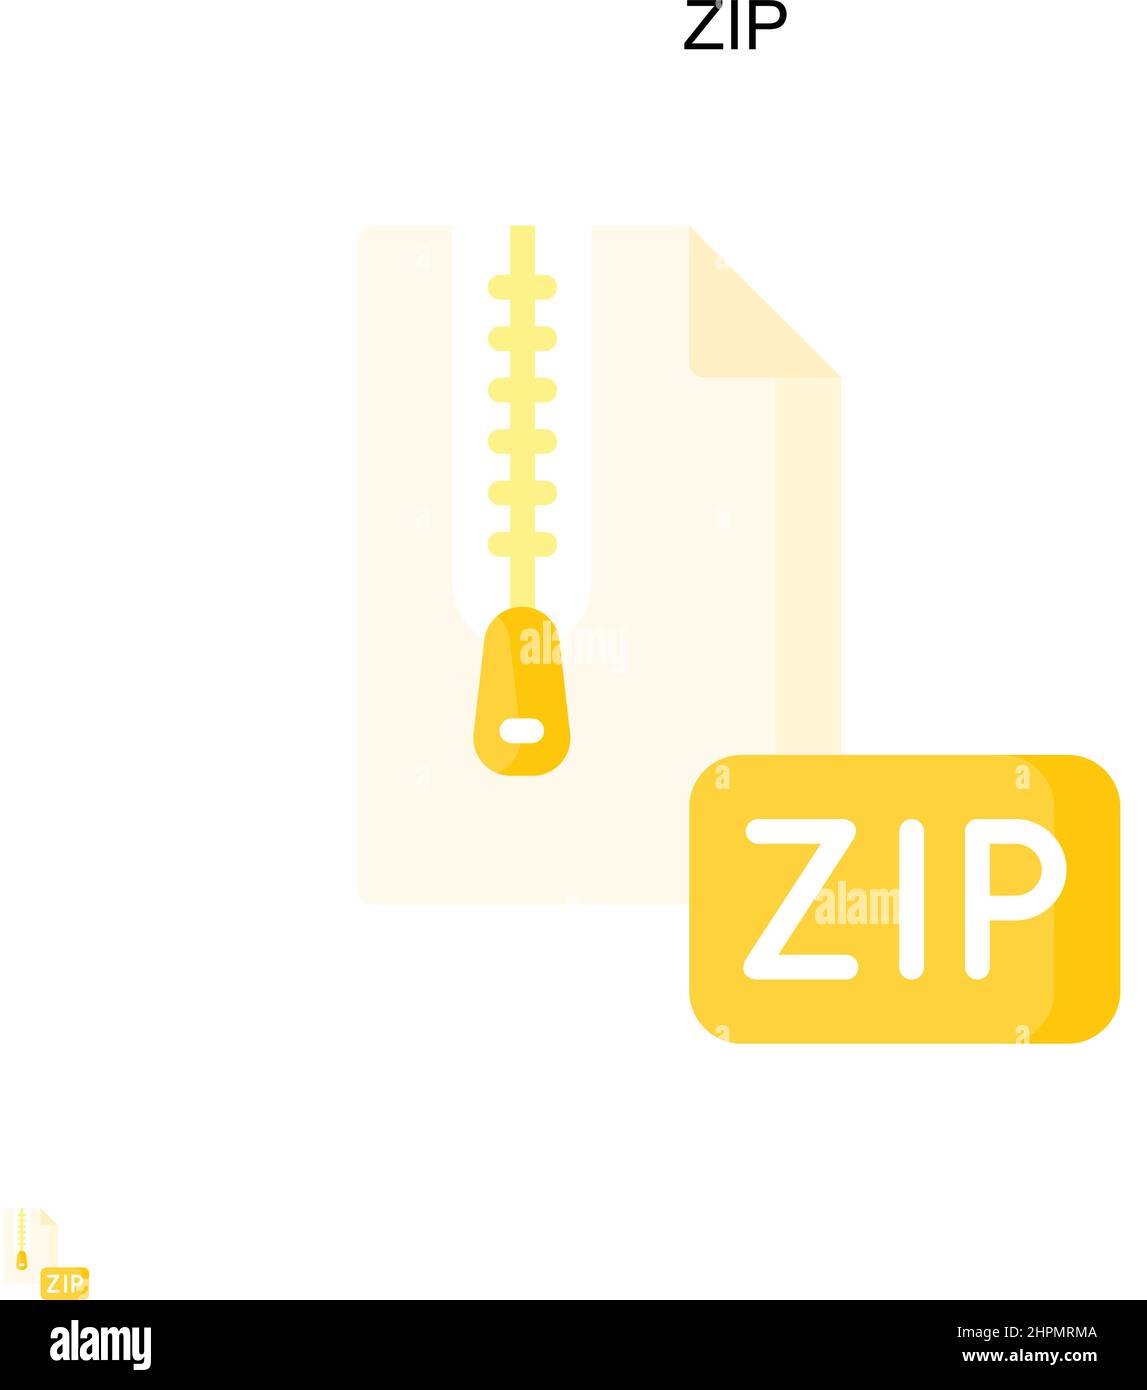 Zipper stock vector. Illustration of icon, zipper, metal - 61090557